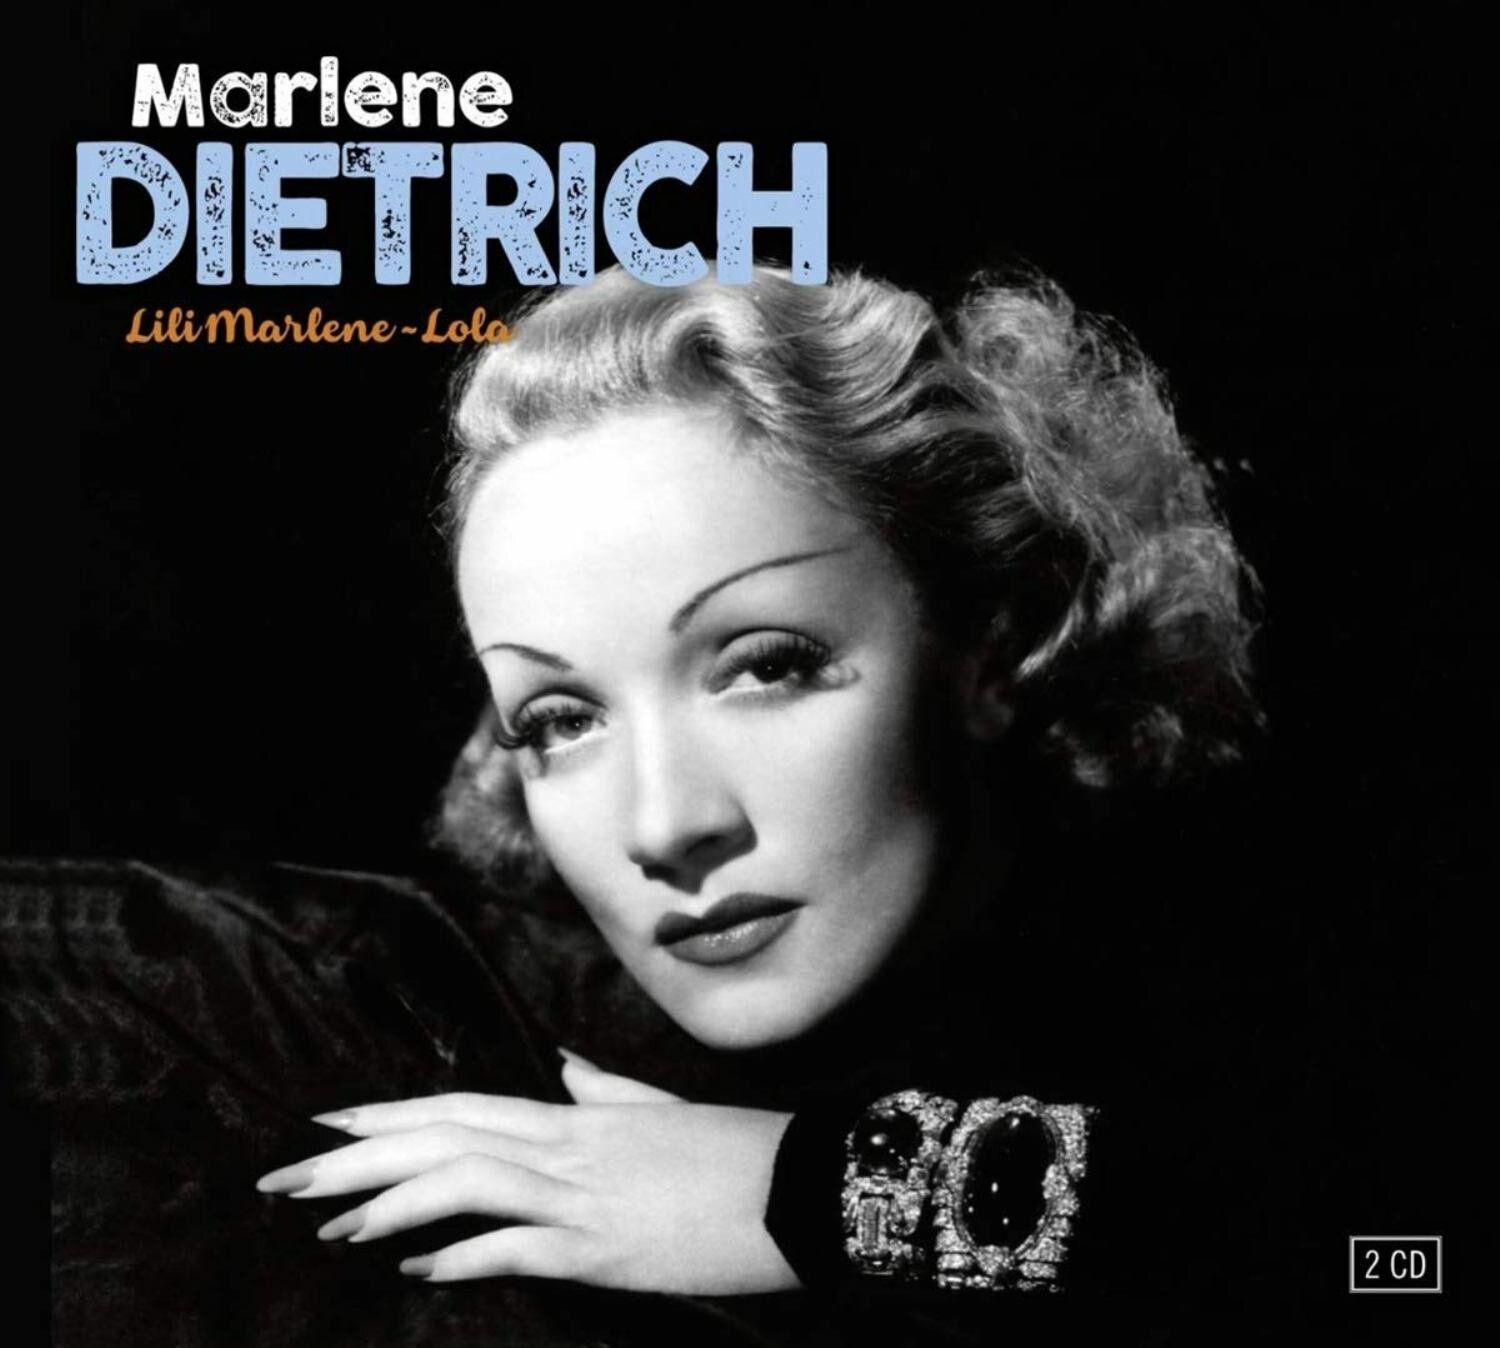 Marlene Dietrich Lili Marlene - Lola (2CD) Le Chant Du Monde Music